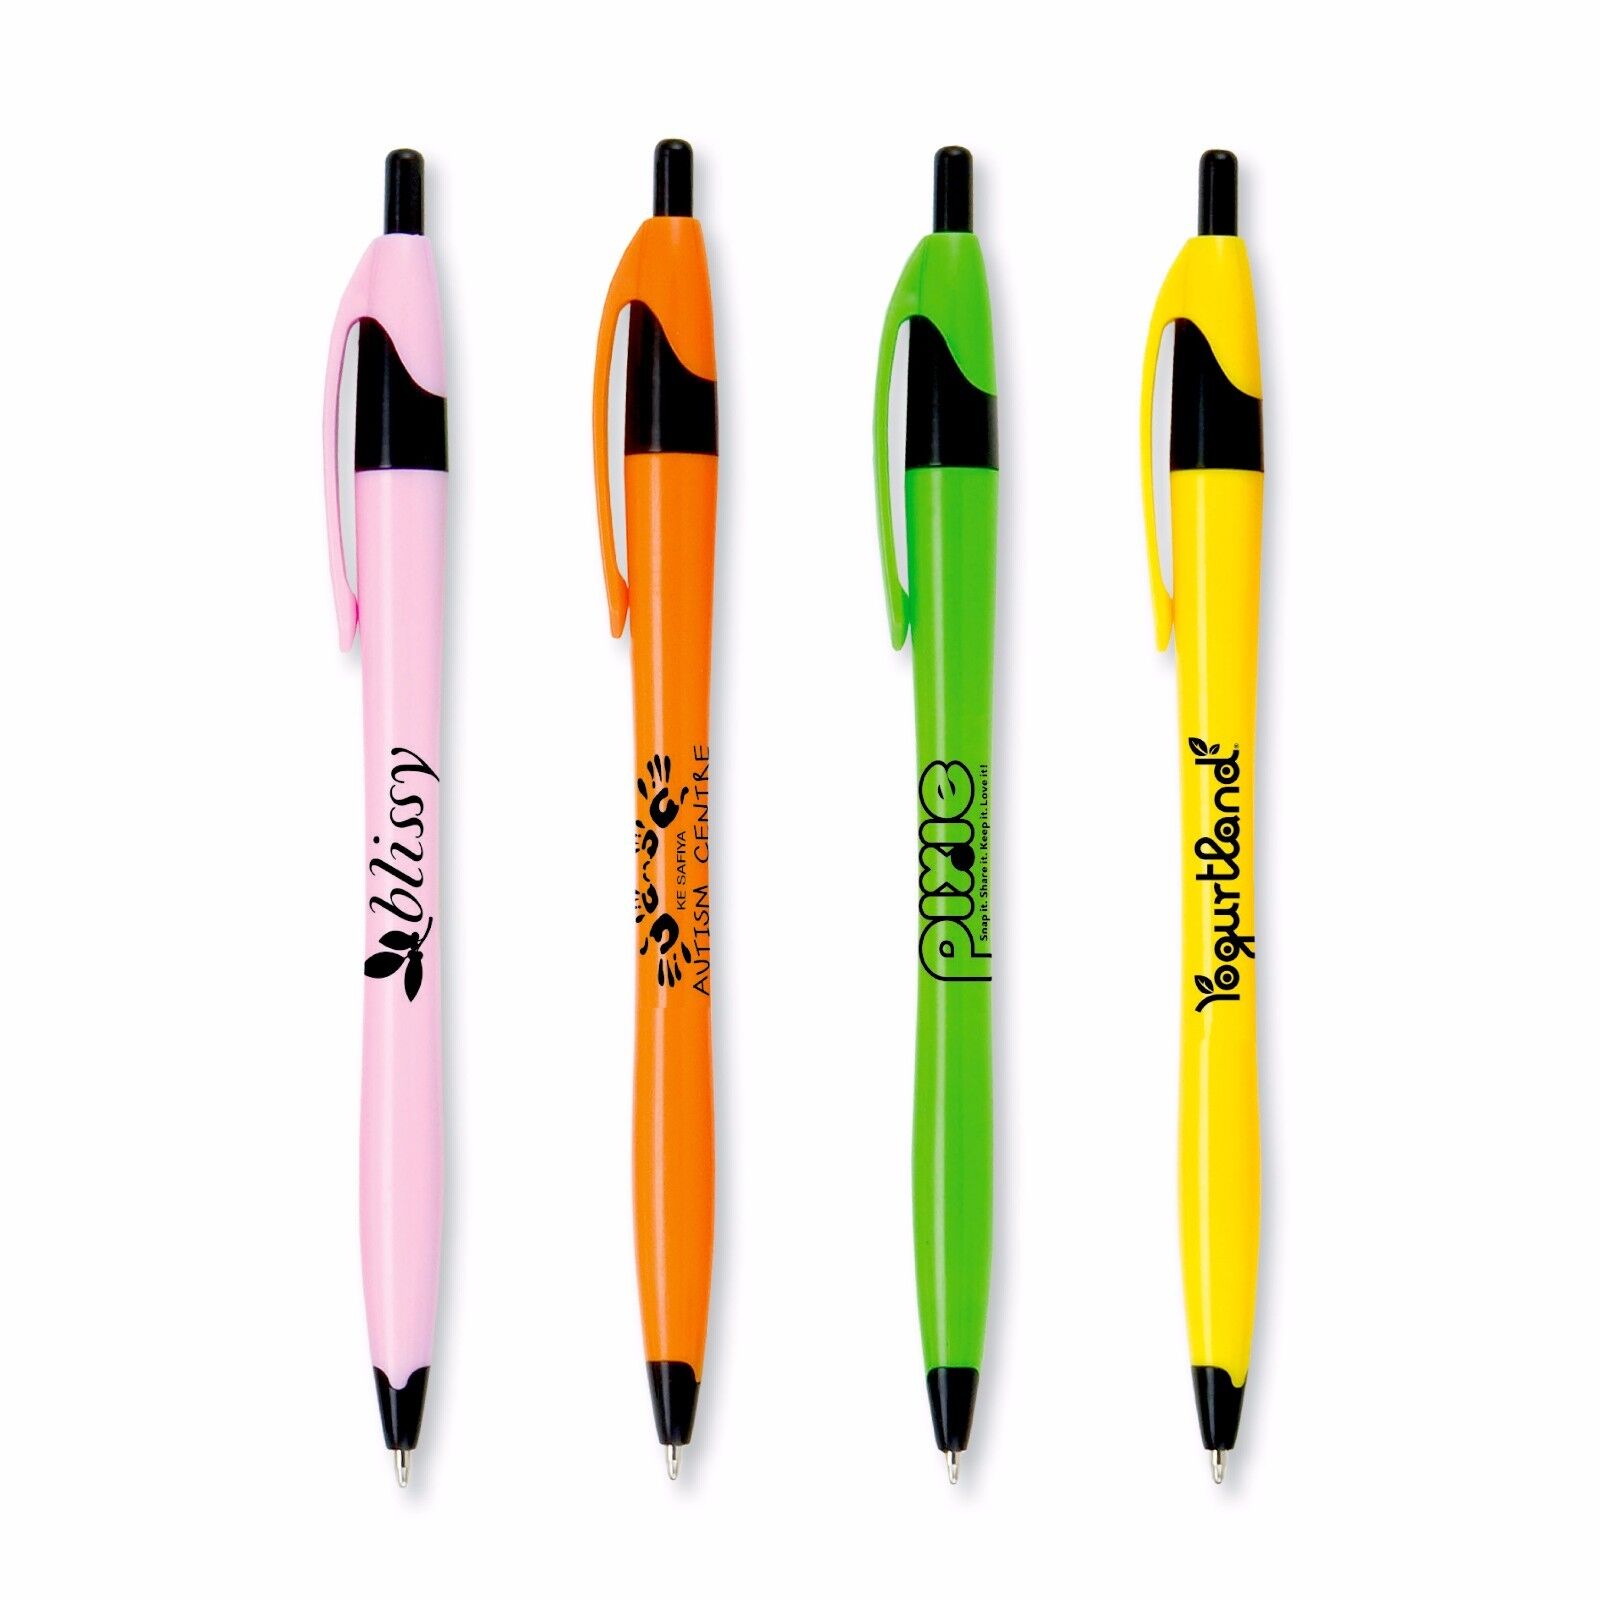 300- Promotional Pens - Personalized Custom Imprinted. Без бренда - фотография #5